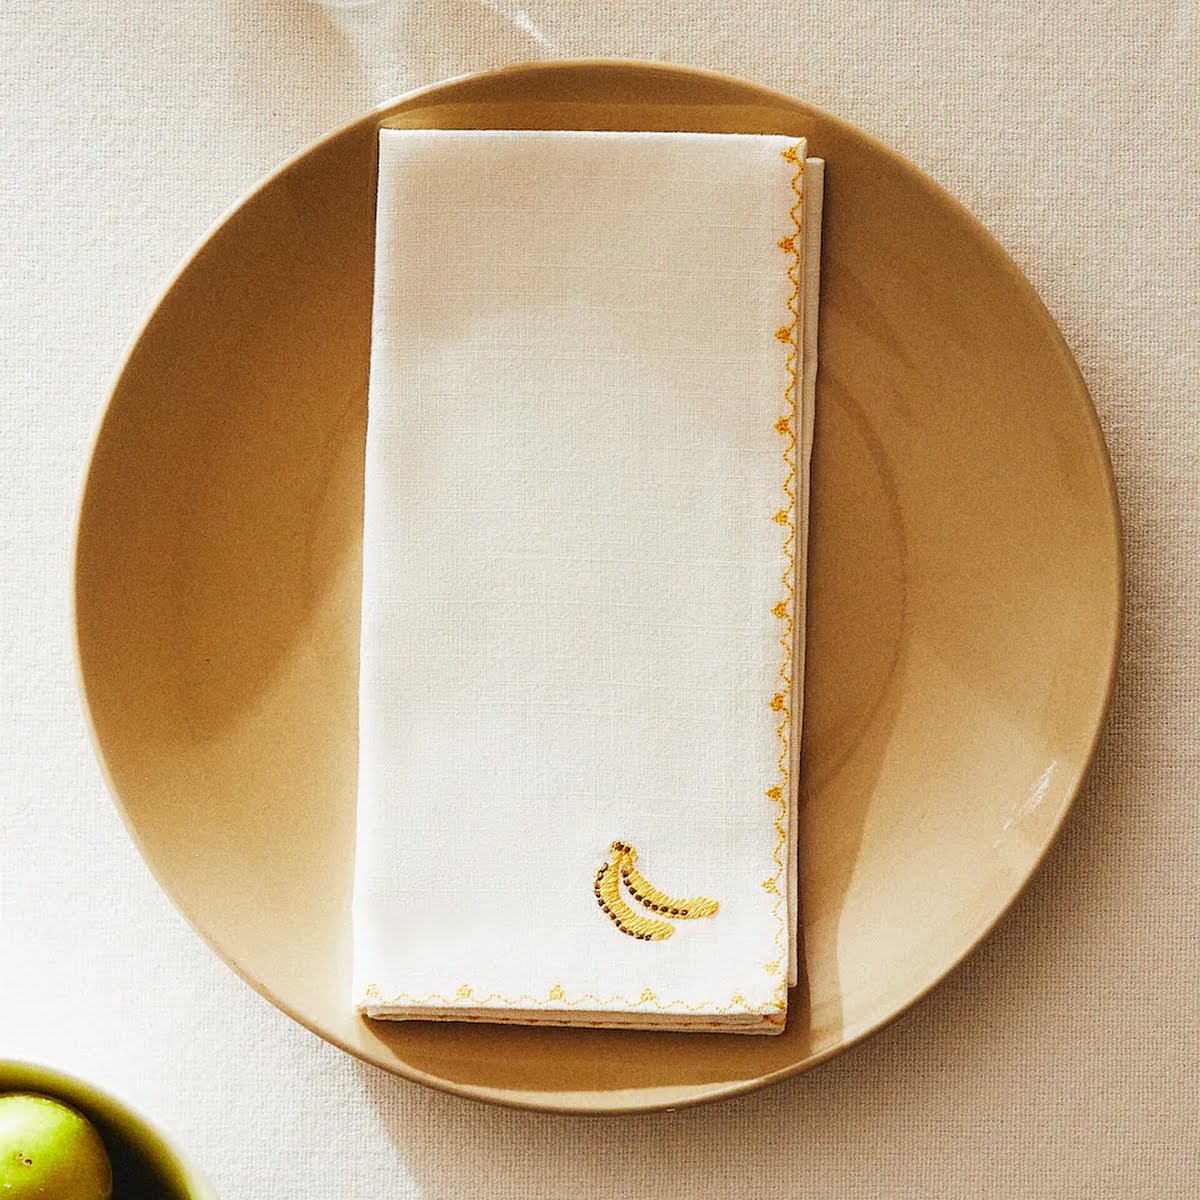 Zara Home, Napkins with Embroidered Banana, €15.99